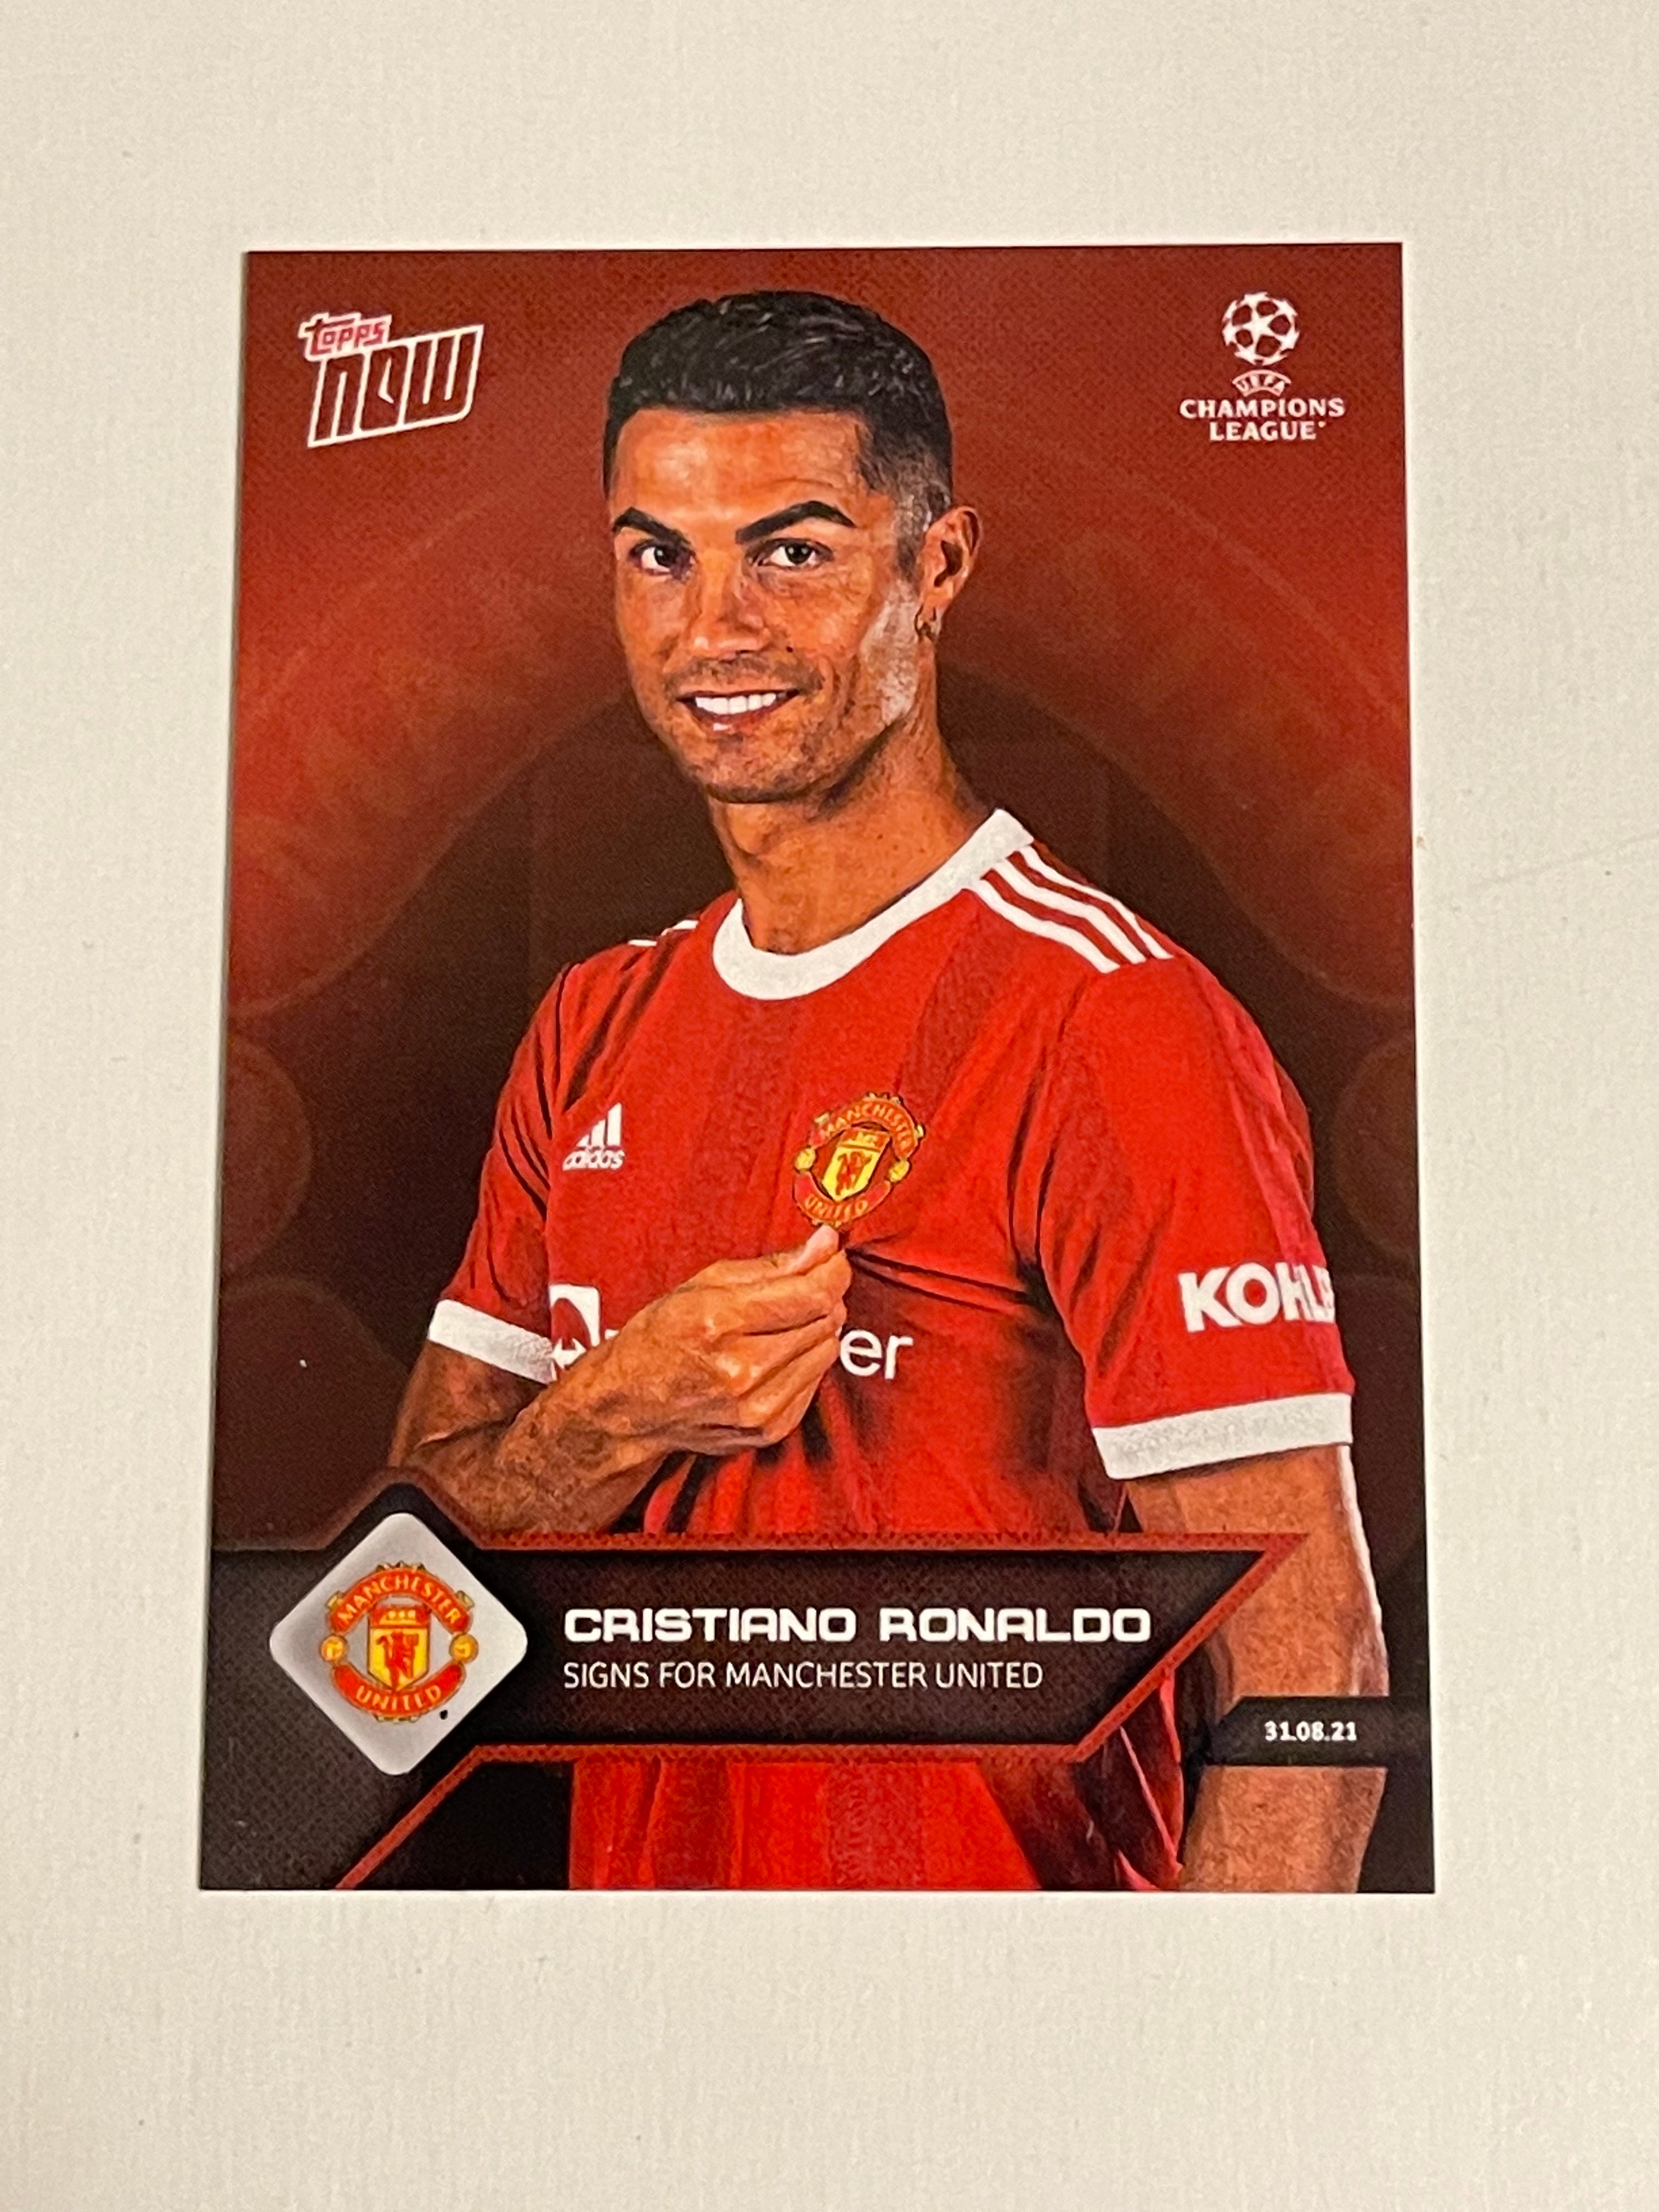 Cristiano Ronaldo rare Topps Manchester United soccer card